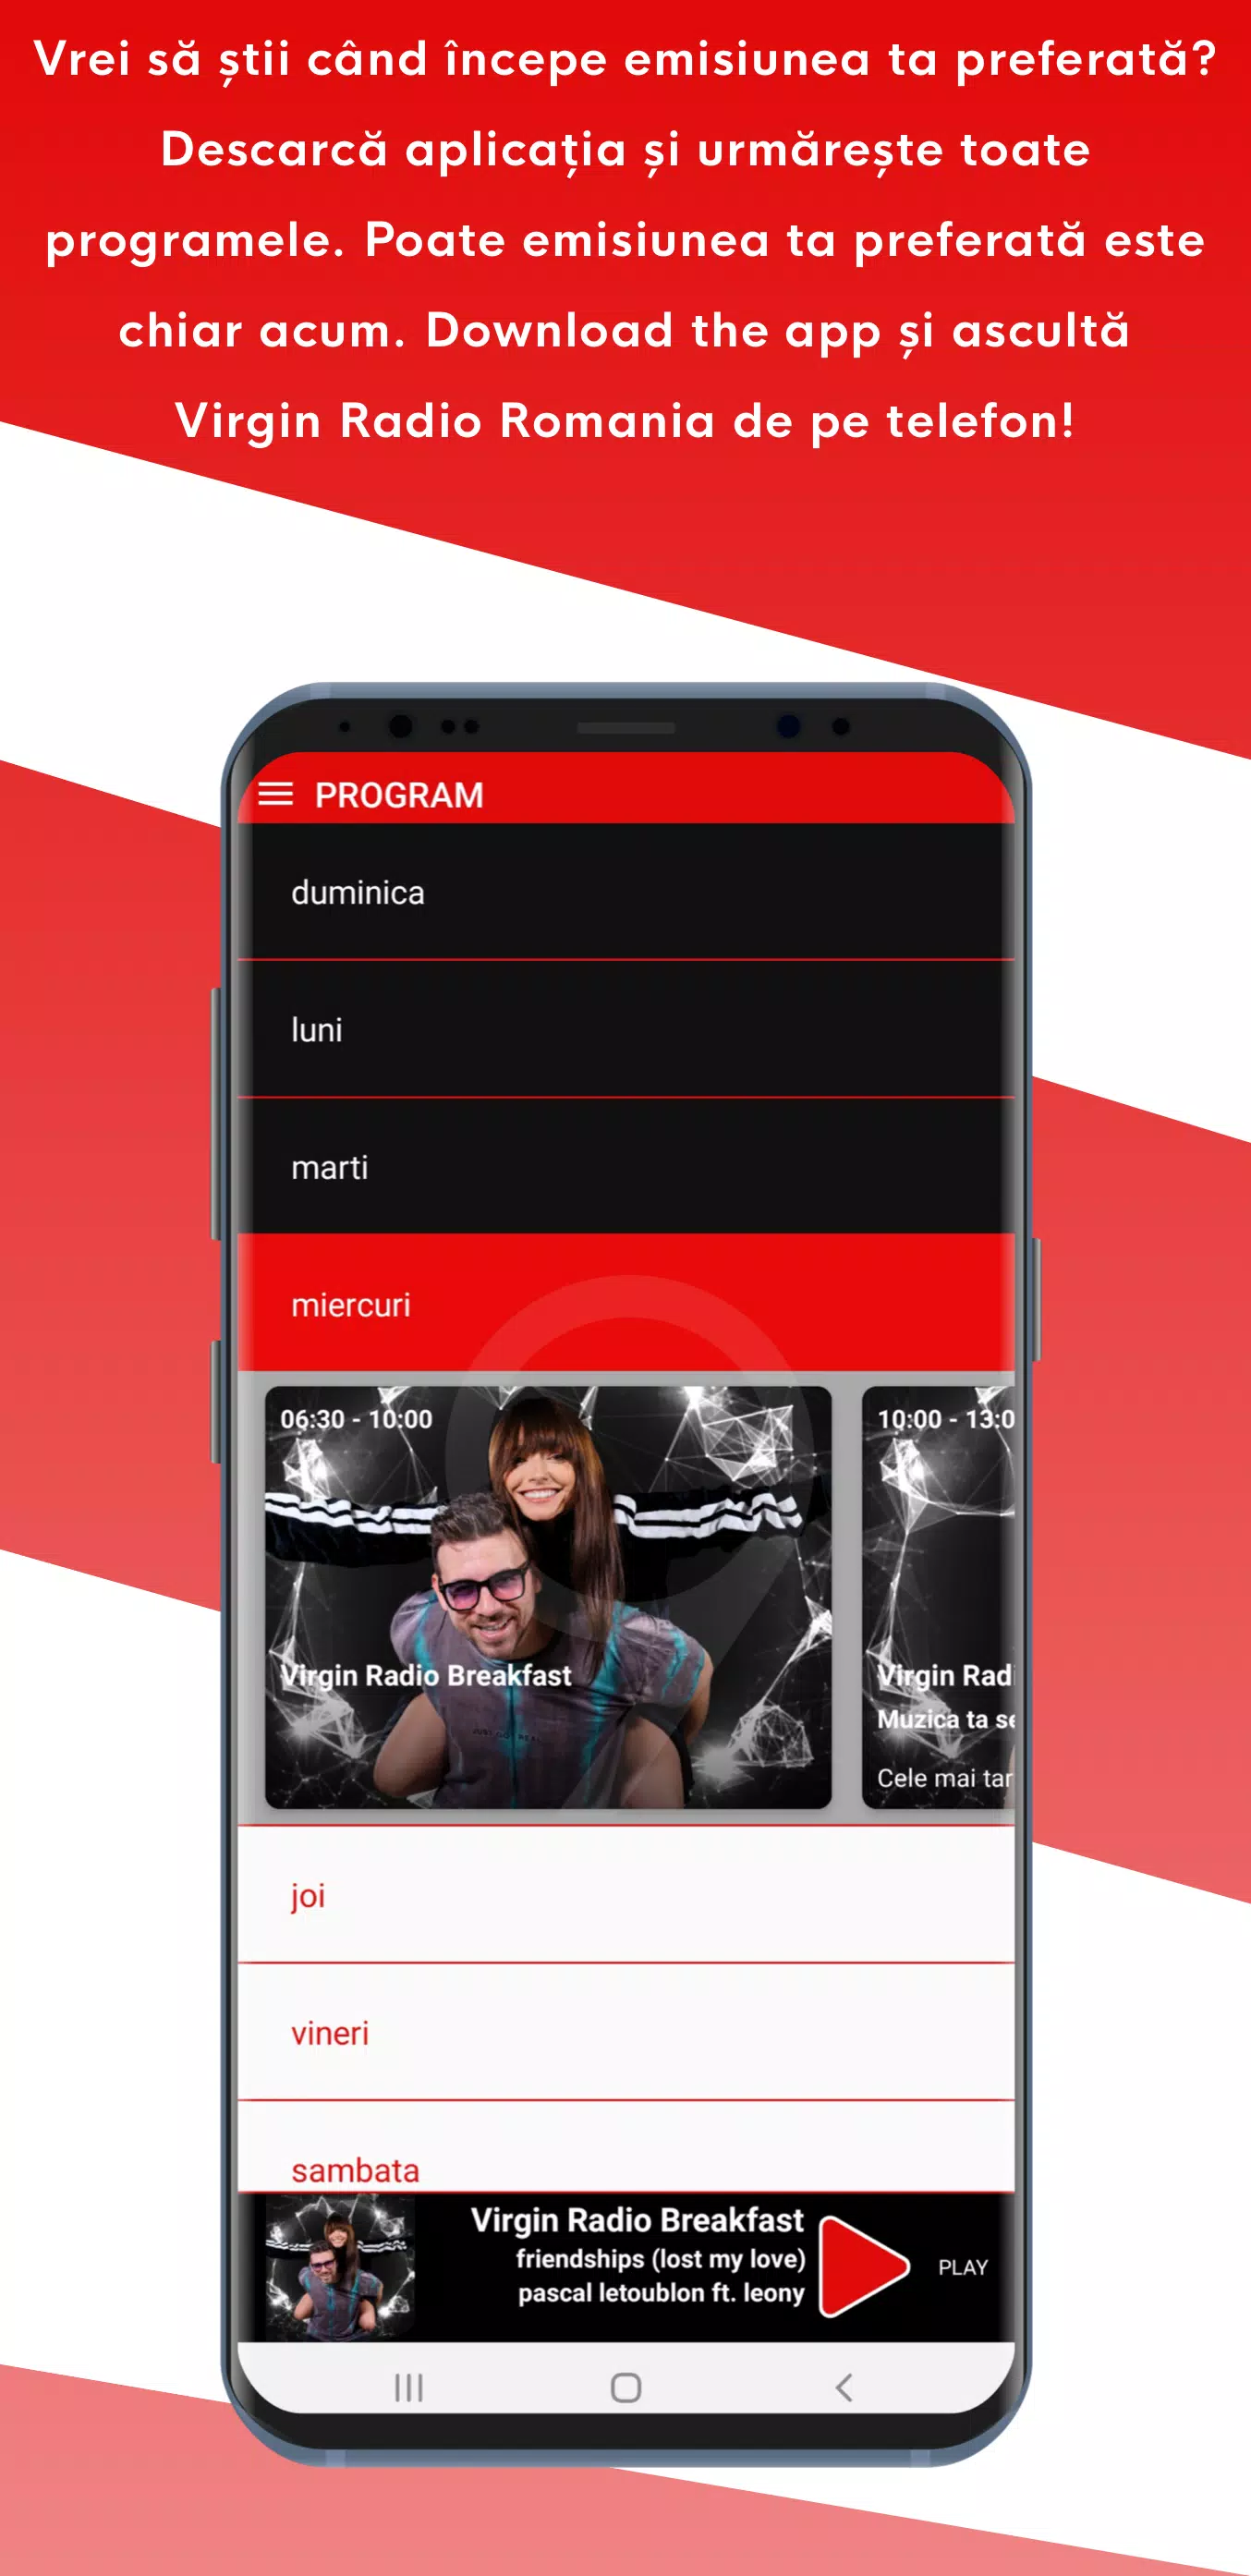 Virgin Radio Romania for Android - APK Download